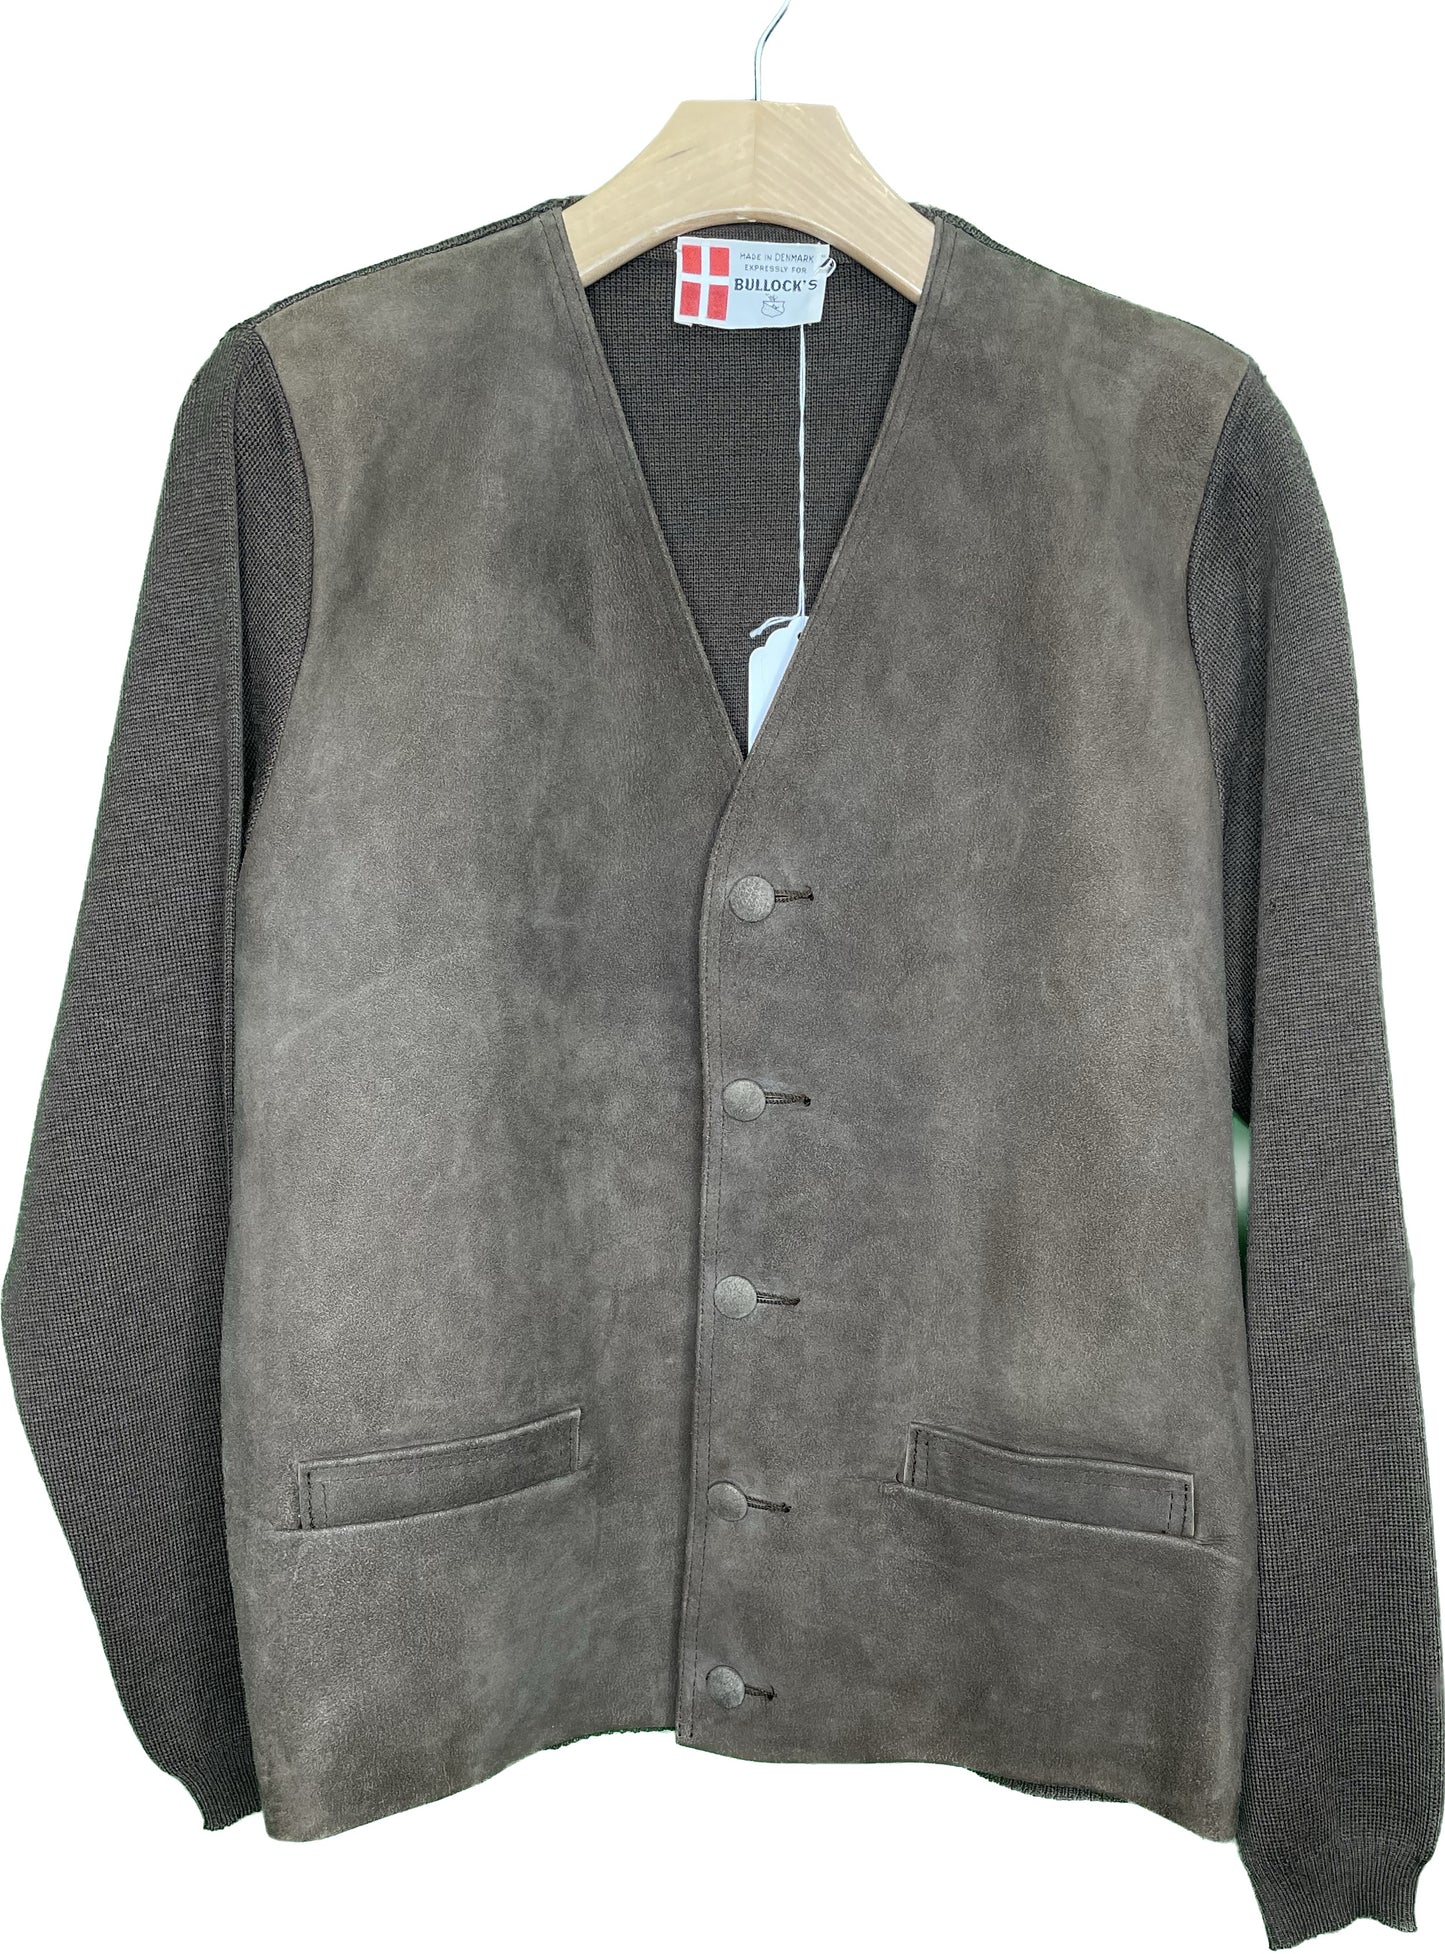 Vintage M Bullocks Cotton Leather Sweater Button Up